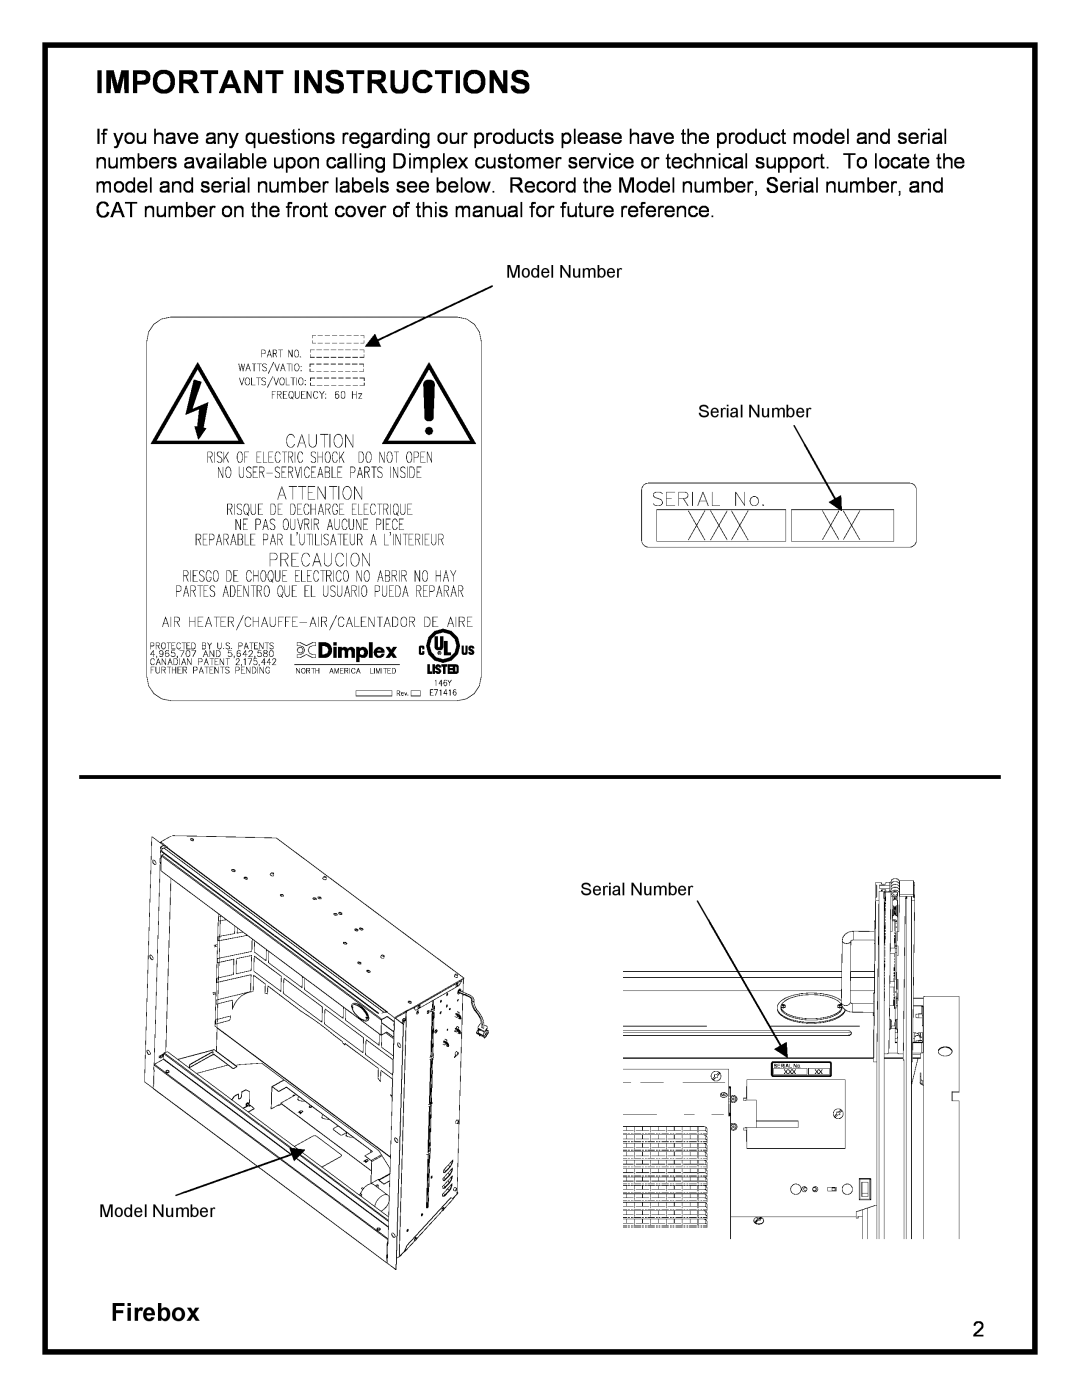 Dimplex DF3215 manual Important Instructions, Firebox 